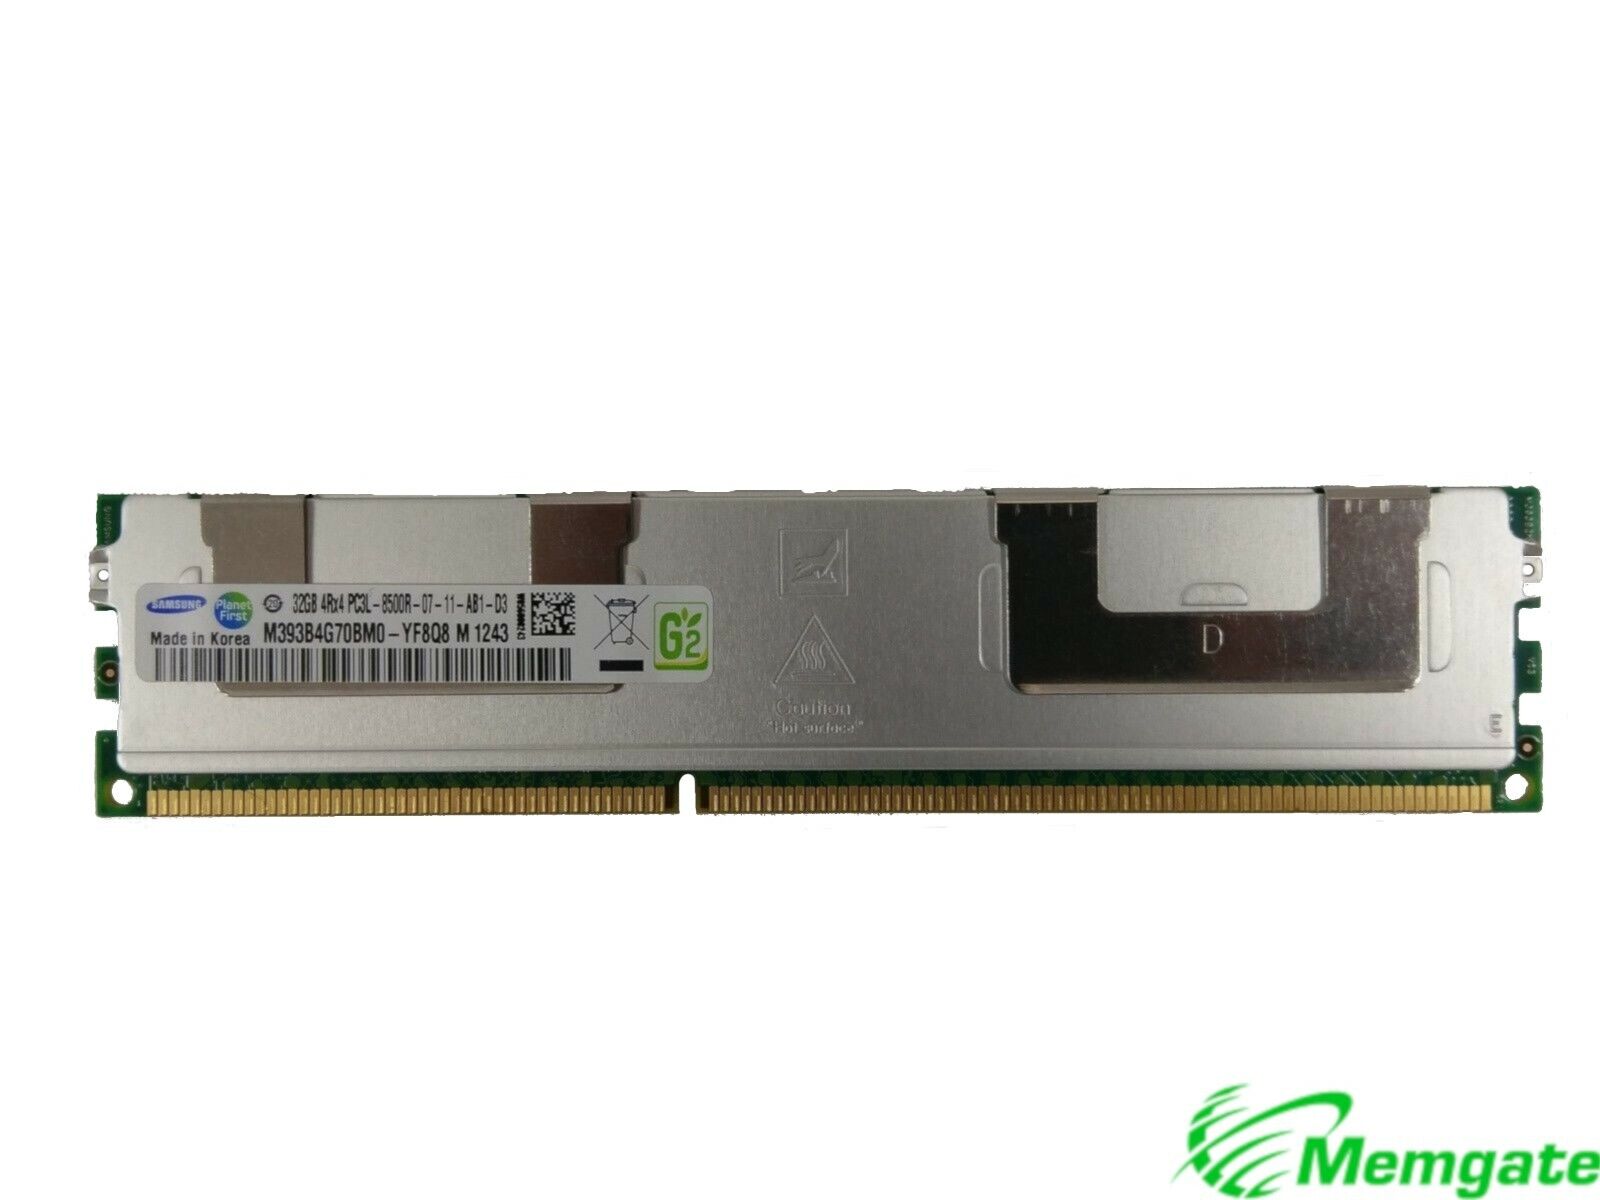 2TB (64 x 32GB) DDR3 ECC Registered Server Memory RAM Dell PowerEdge R910